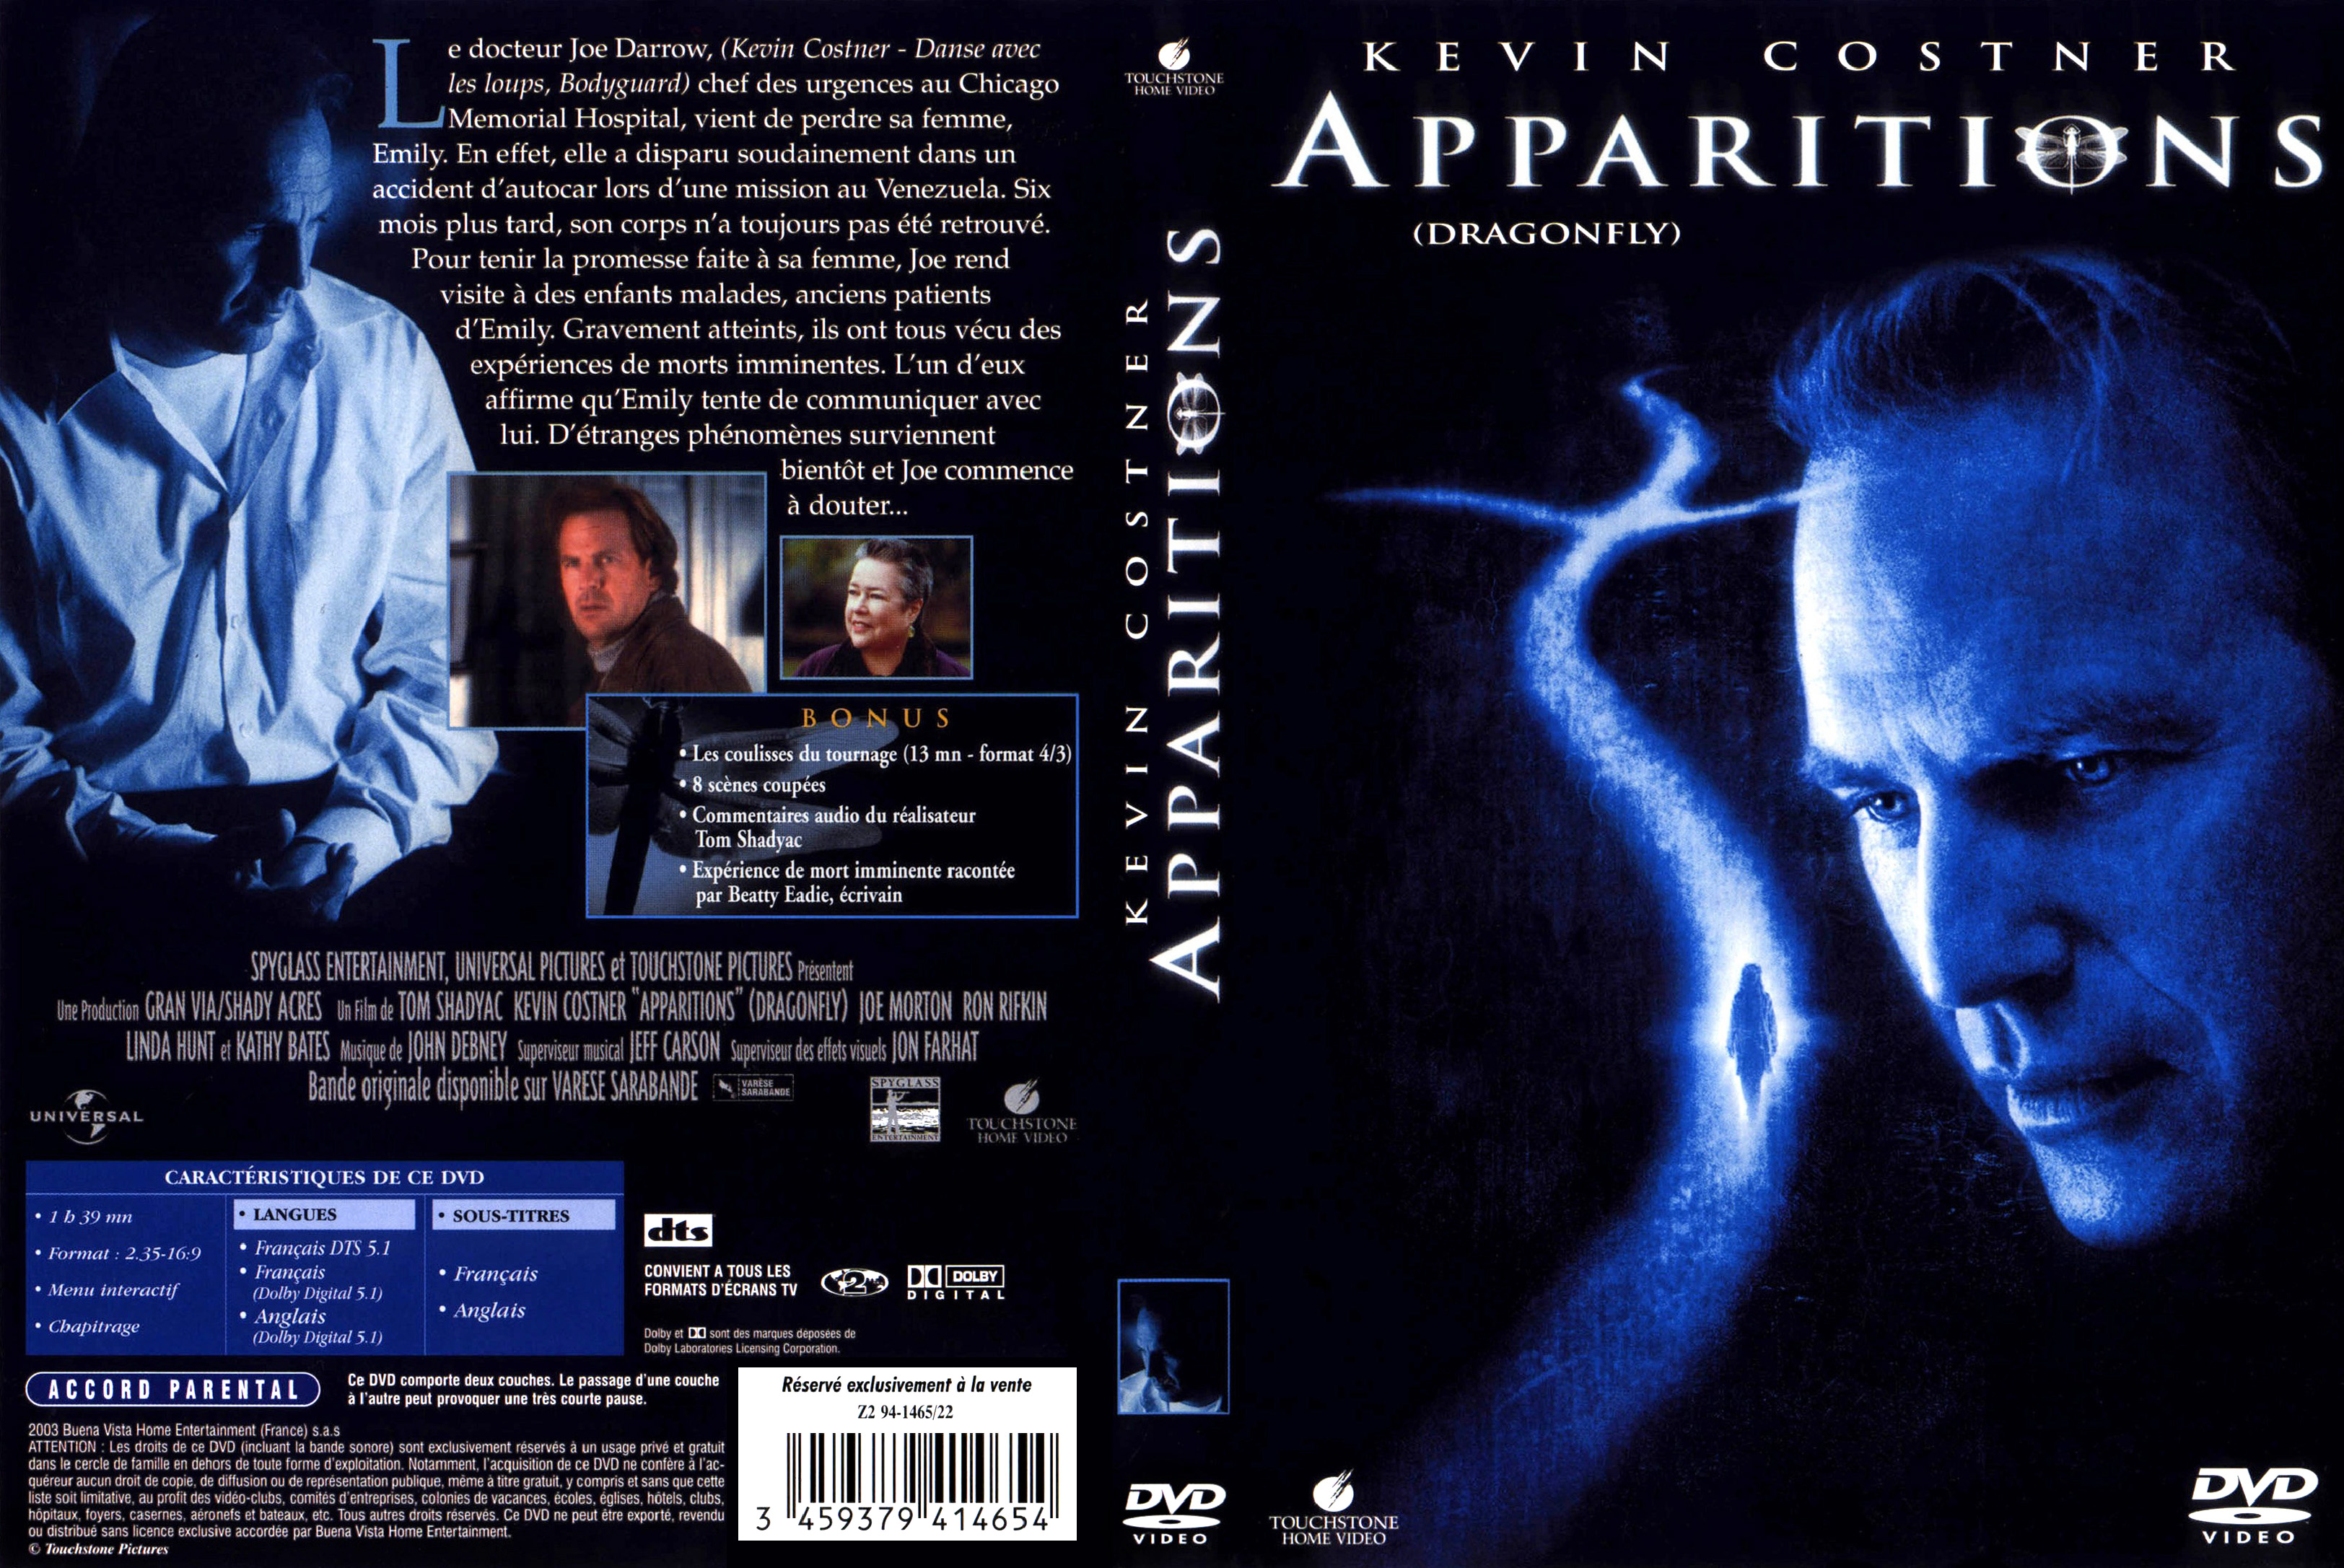 Jaquette DVD Apparitions